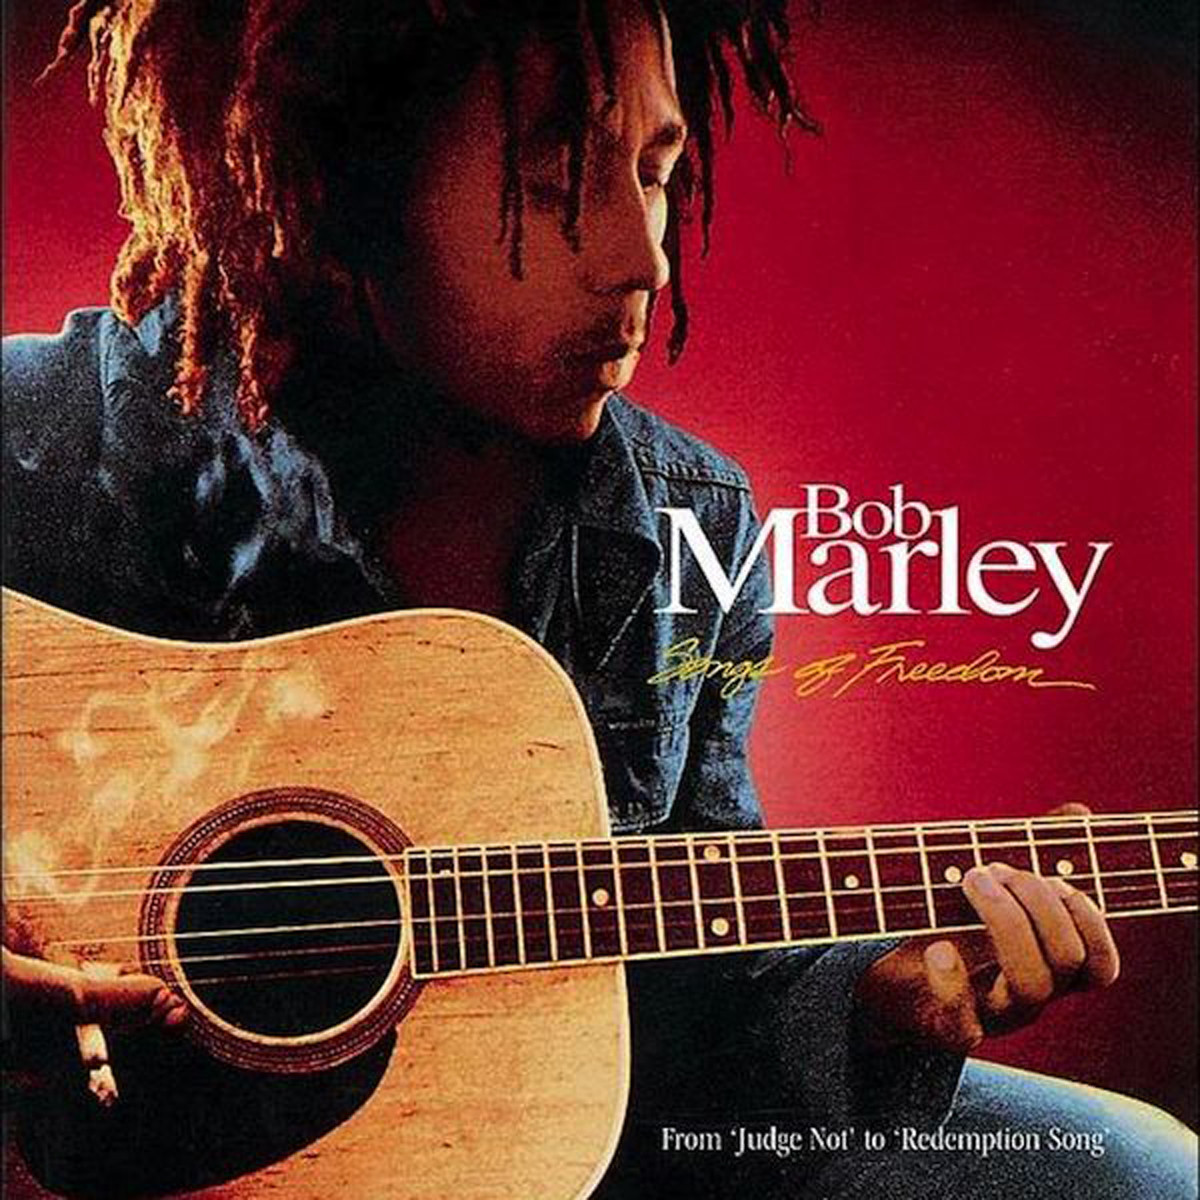 Songs Of Freedom - Bob Marley - VP Reggae1200 x 1200